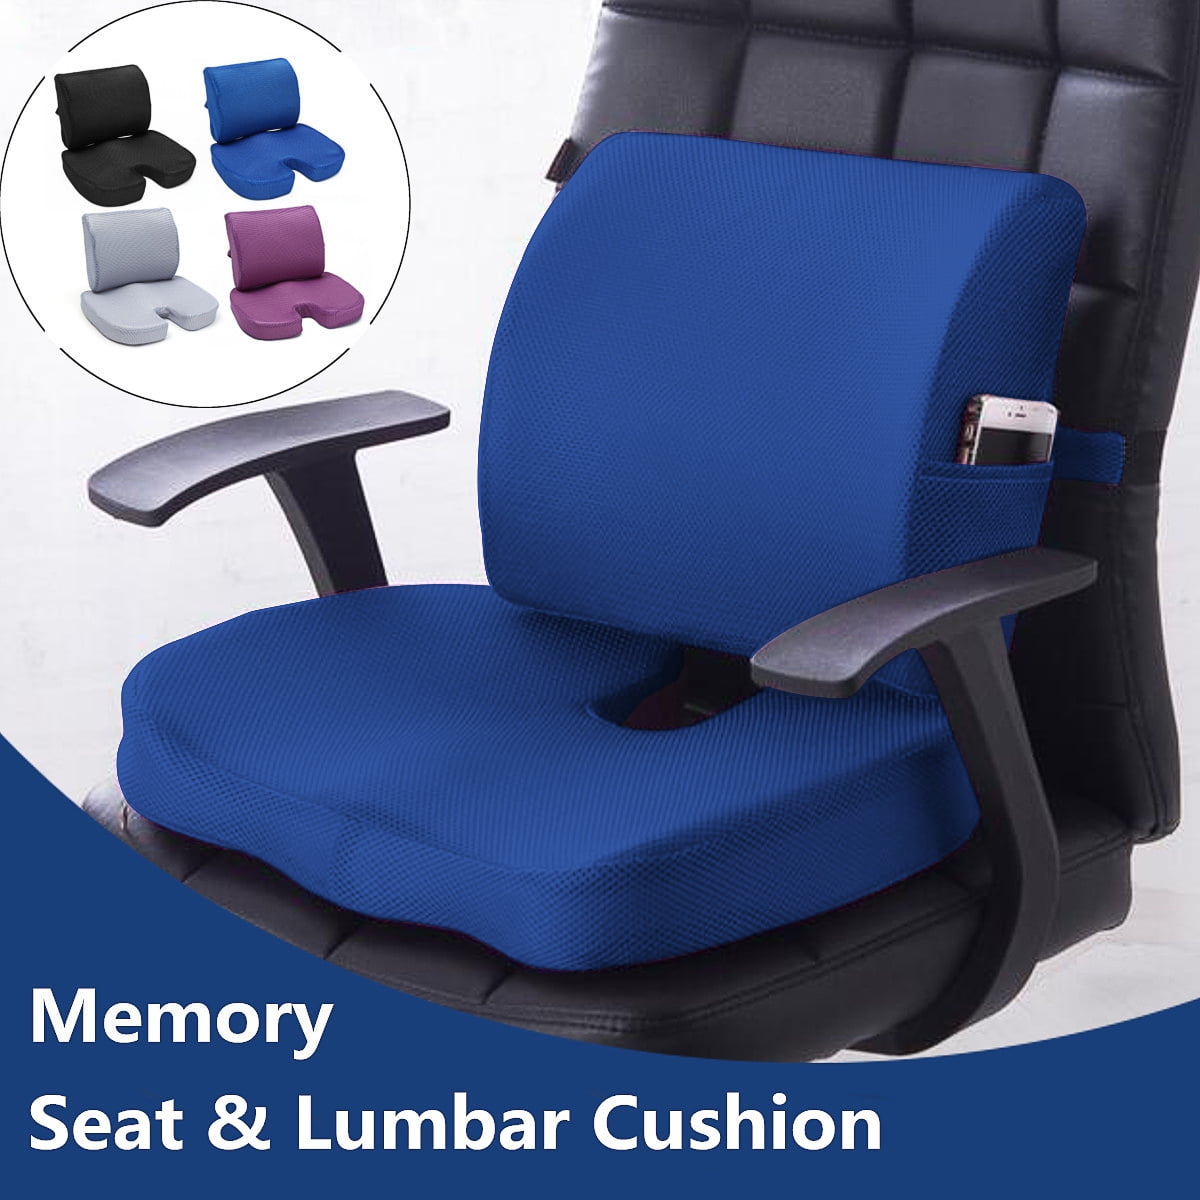 SnugPad Seat Cushion Black 2Pk 